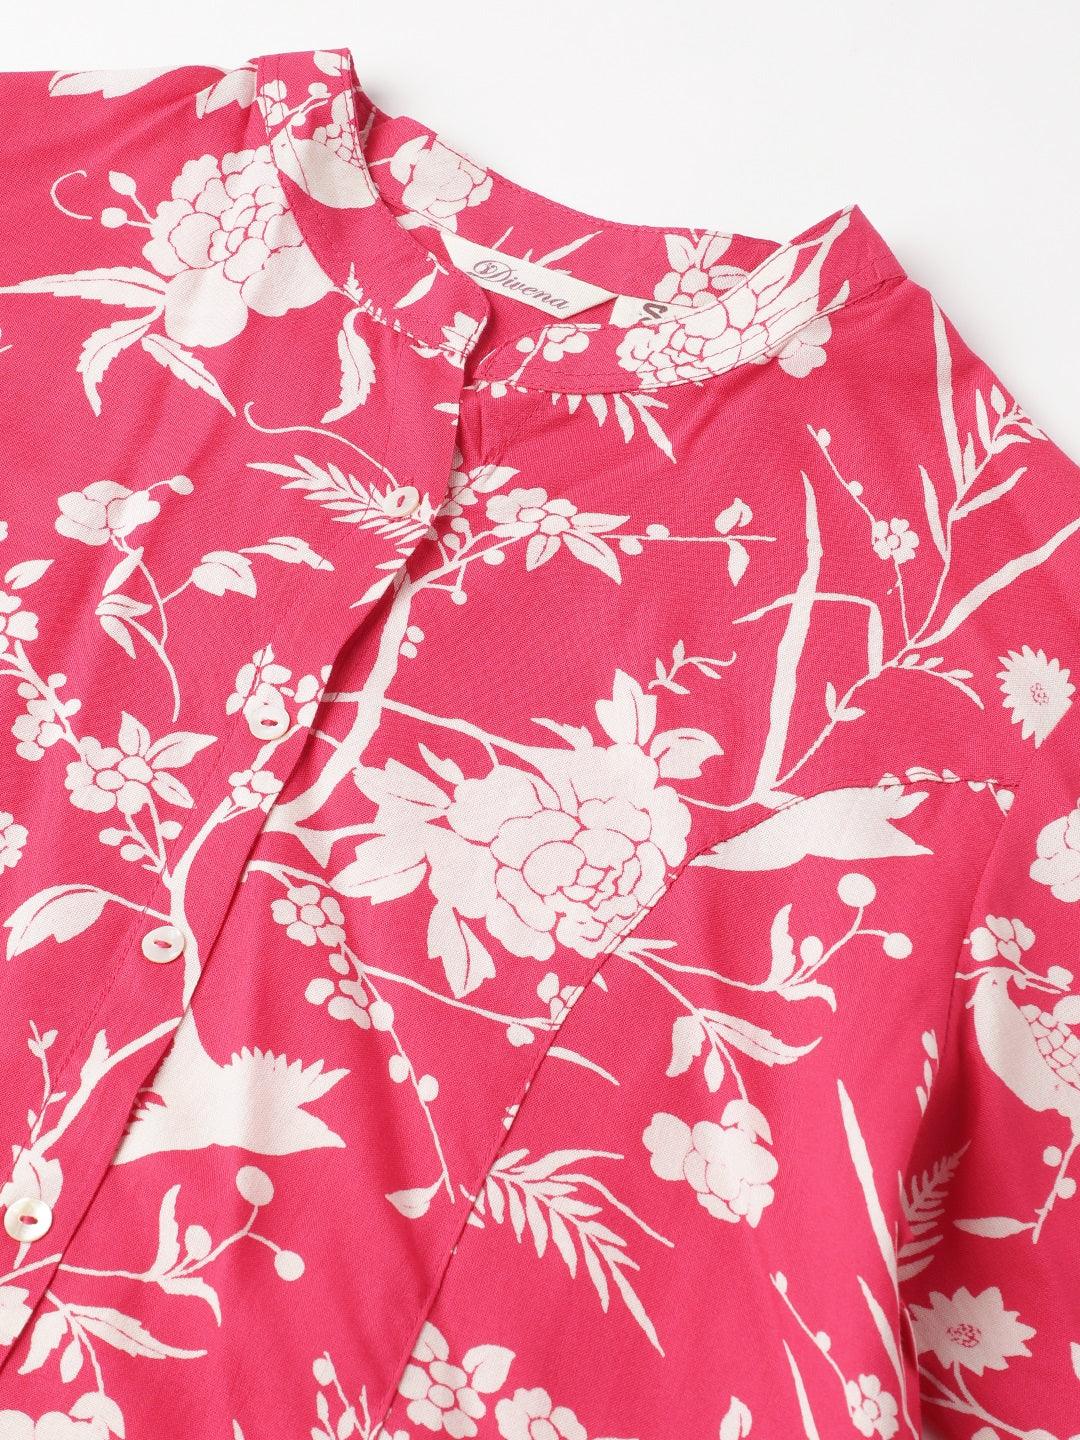 Divena Hot Pink Floral Printed Rayon A-line Shirt Style Top - divena world